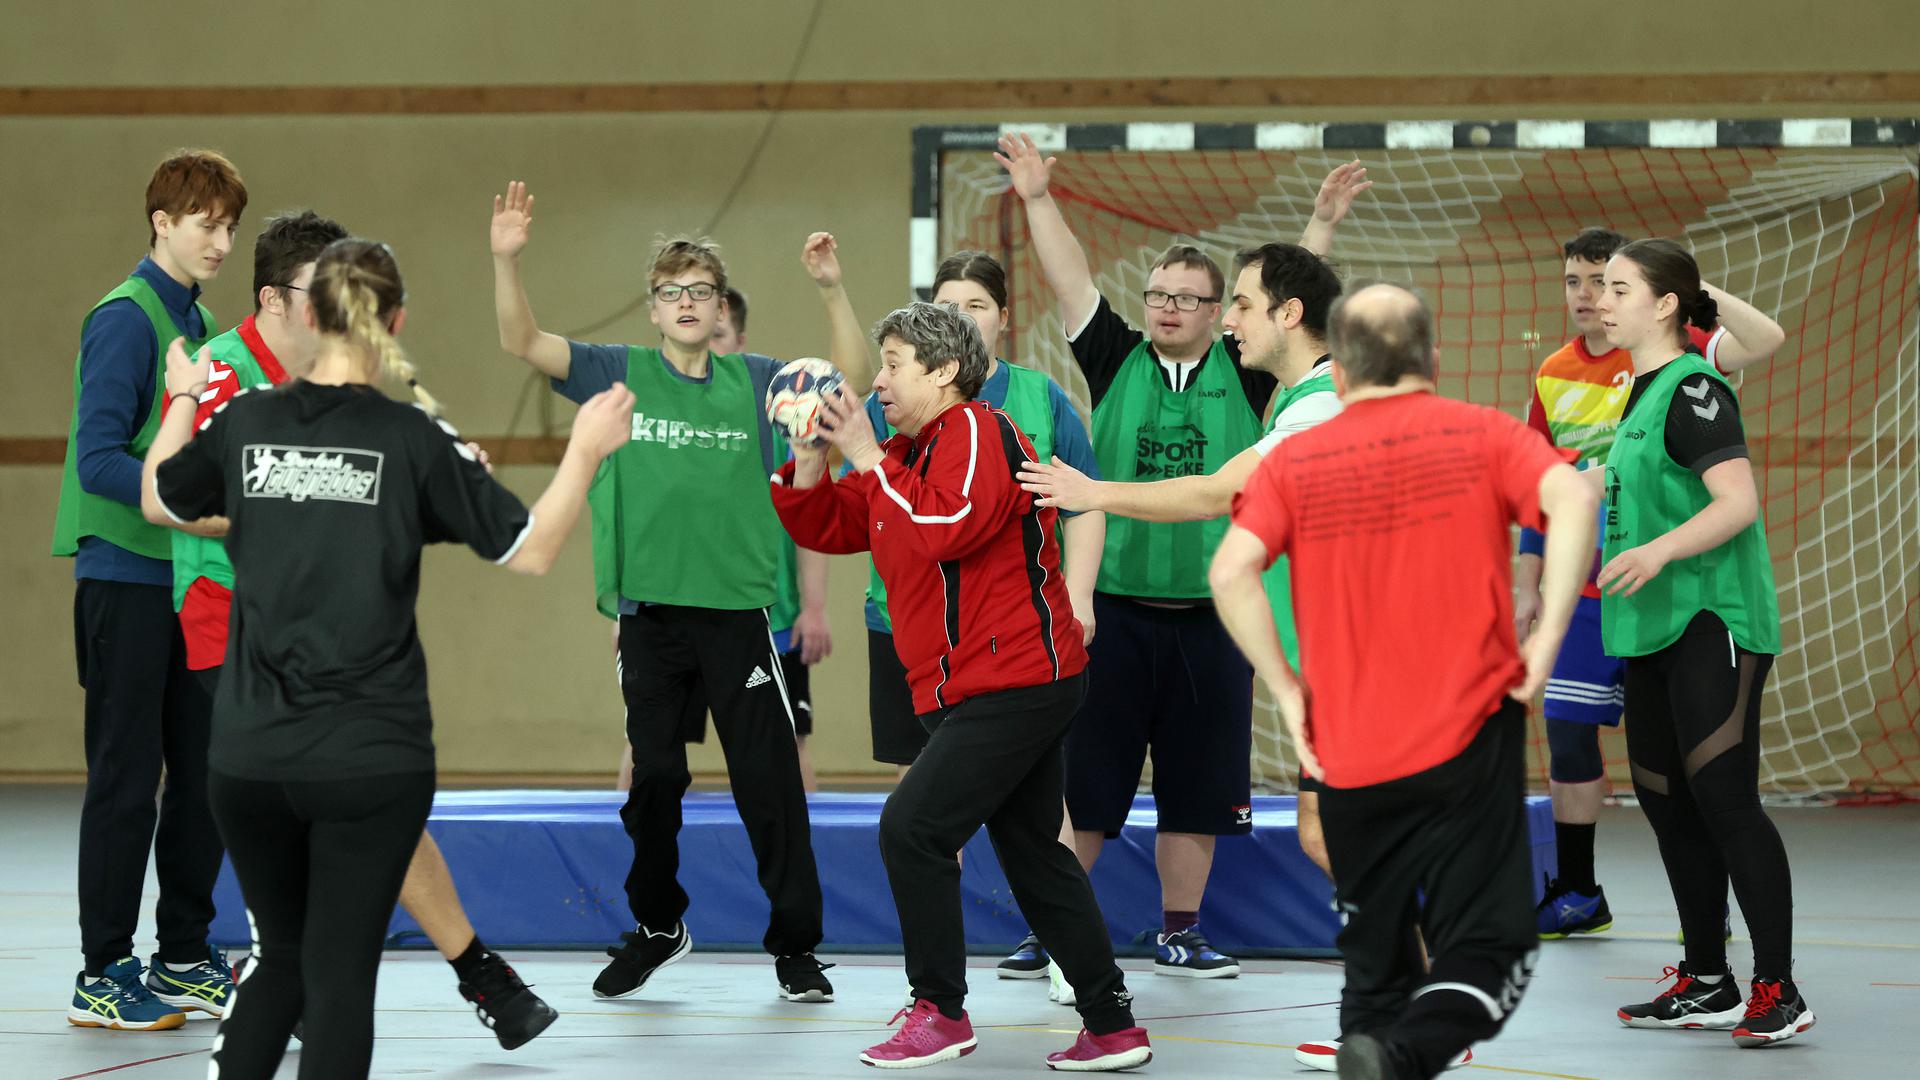 4.02.2023 Training der „Turnados“, der inklusiven Handballmannschaft der Turnerschaft Durlach (TSD).